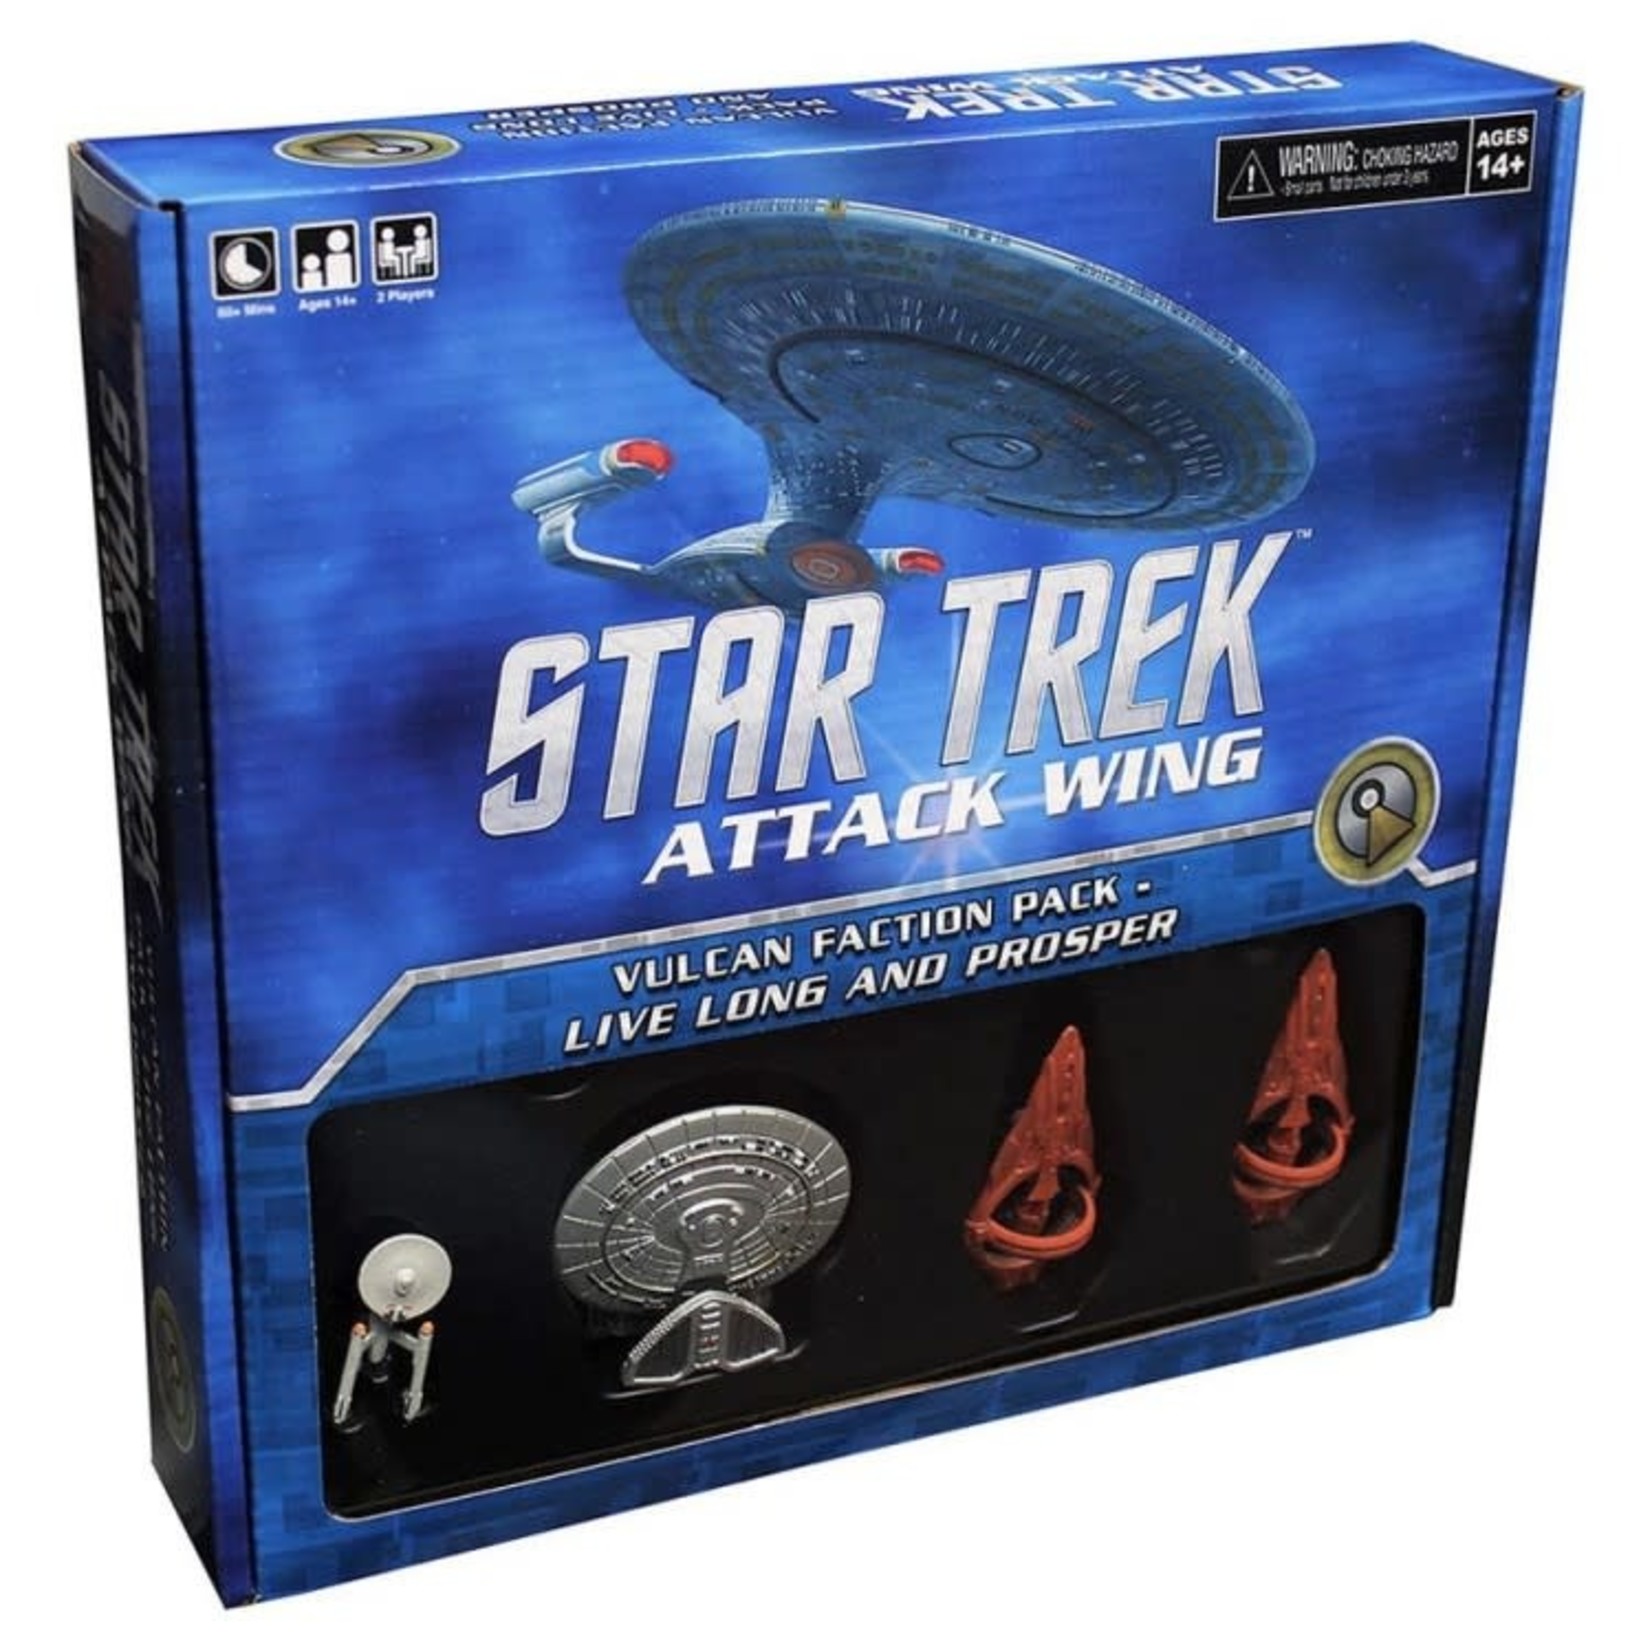 Wizkids Star Trek Attack Wing: Vulcan Faction Pack - Live Long and Prosper